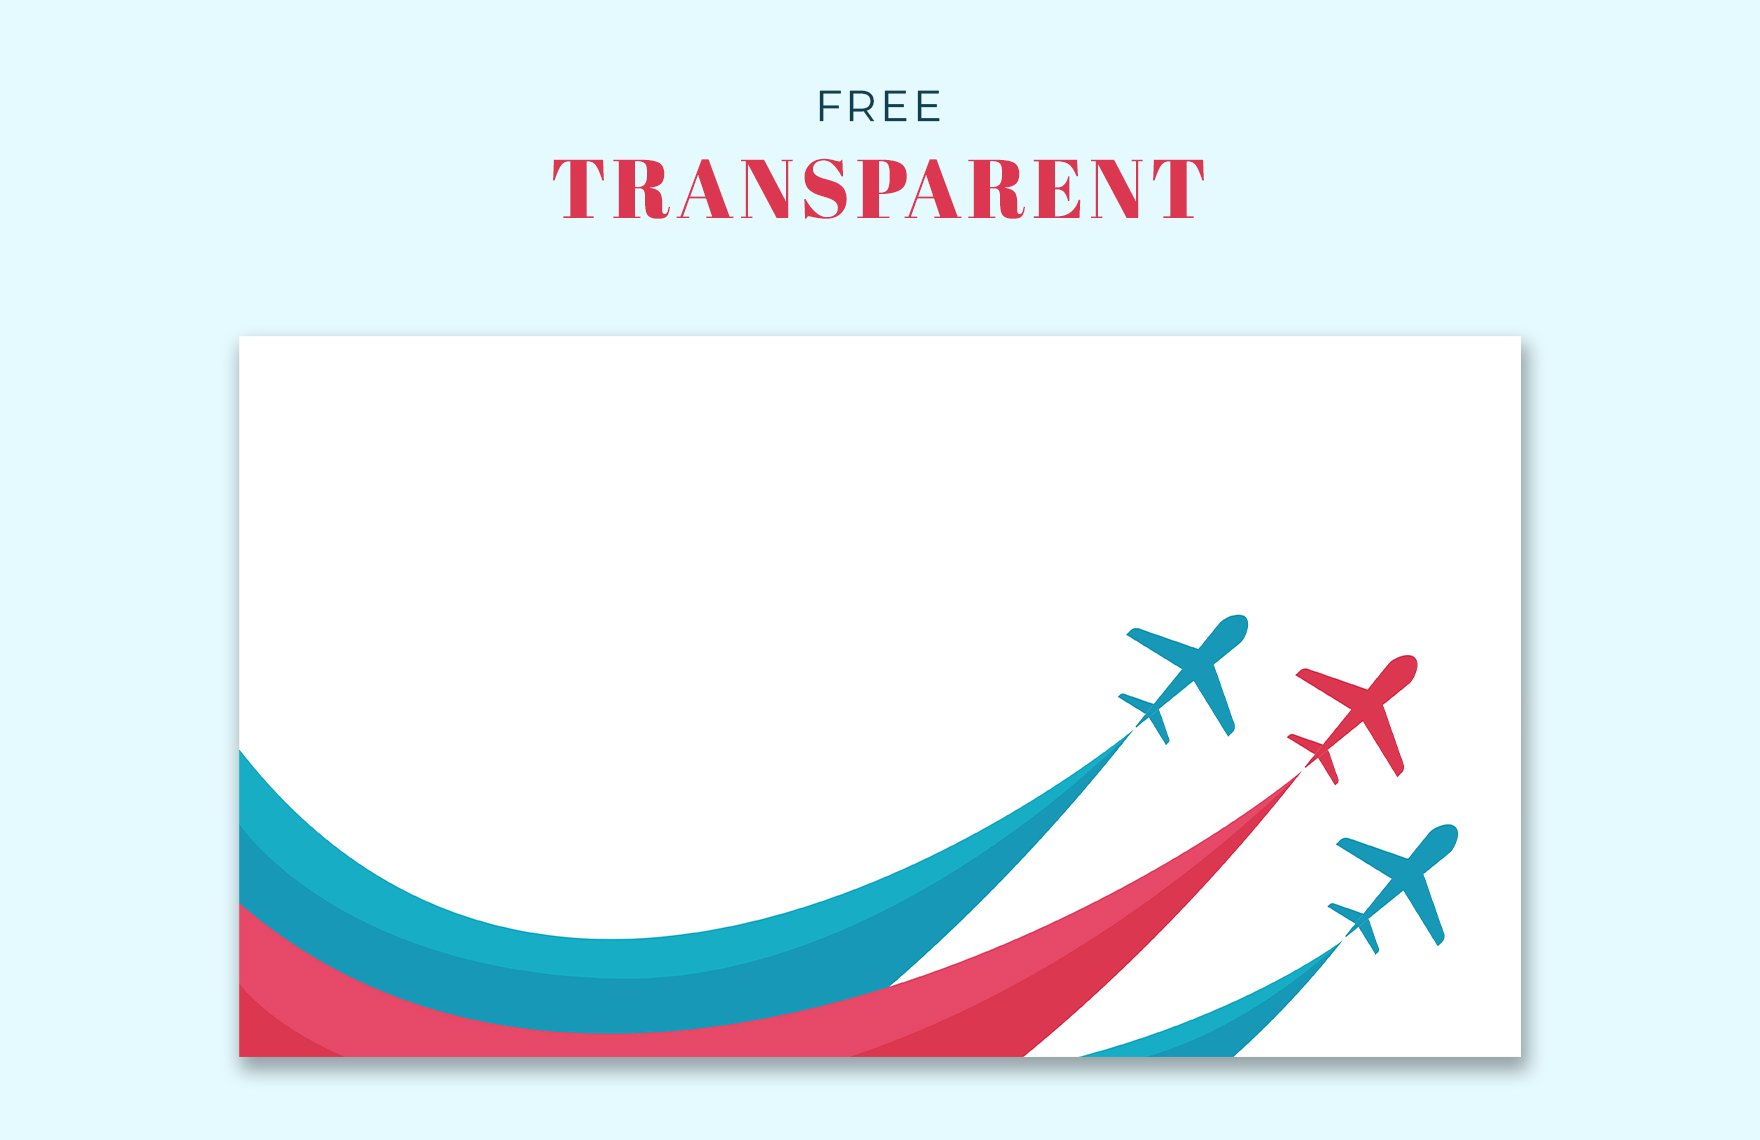 Free National Aviation Day Transparent in PDF, Illustrator, SVG, JPG